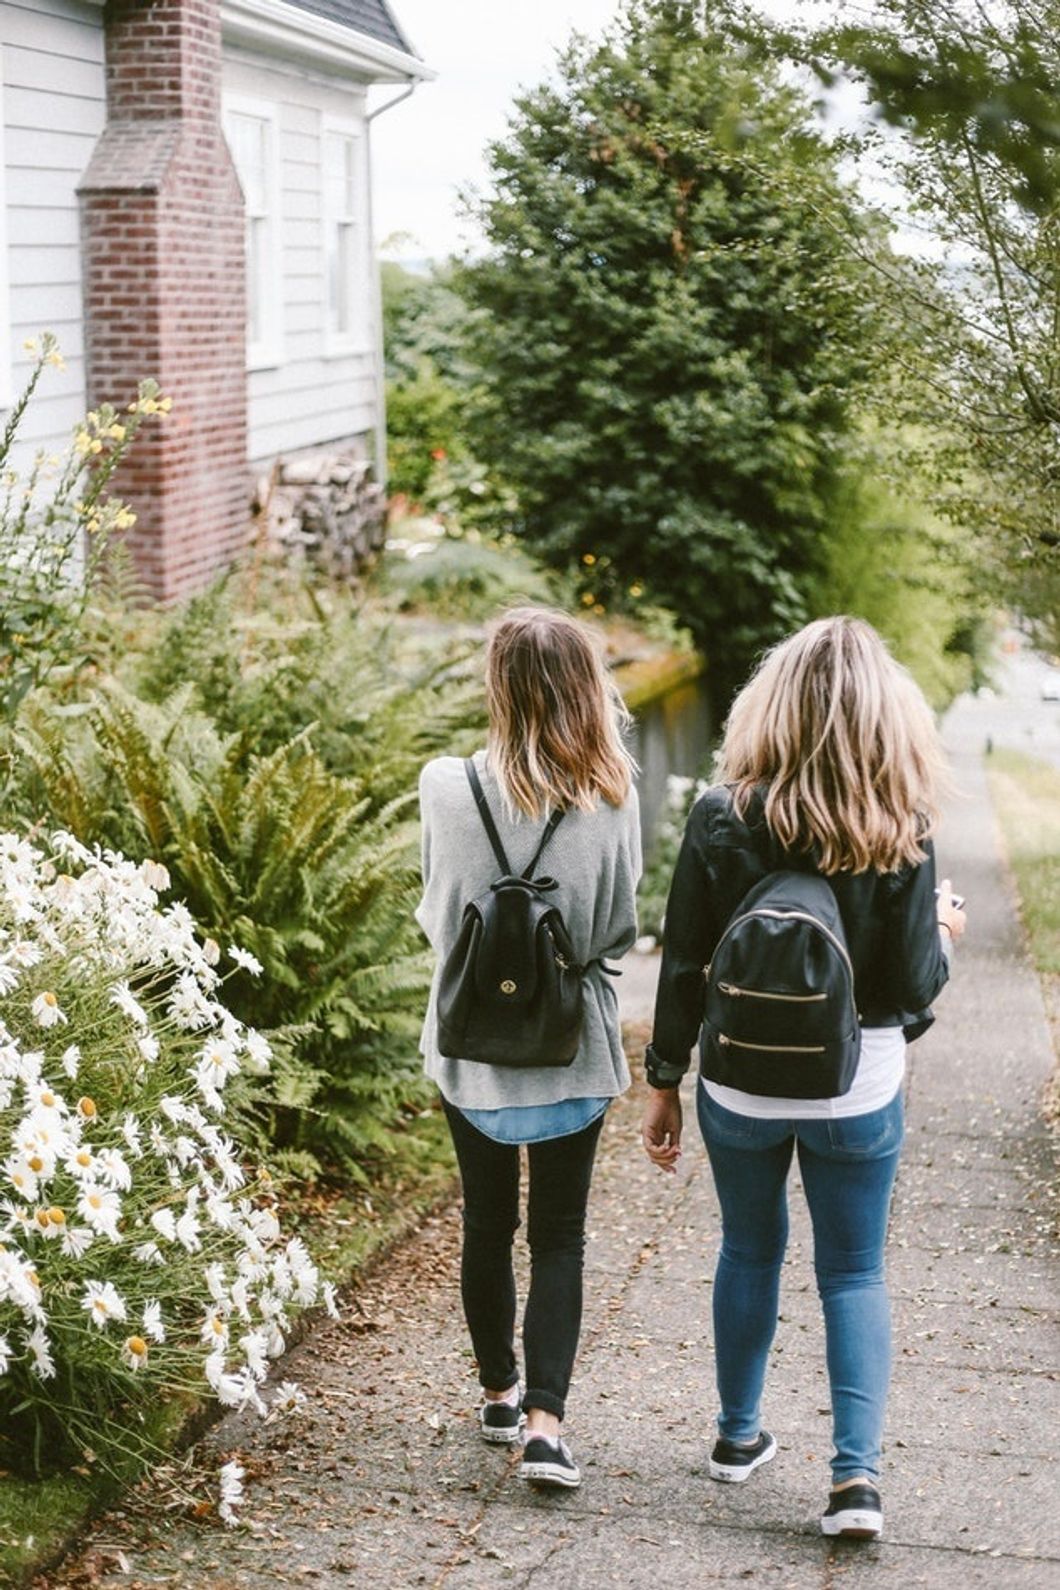 girls wearing backpacks walking down sidewalk together